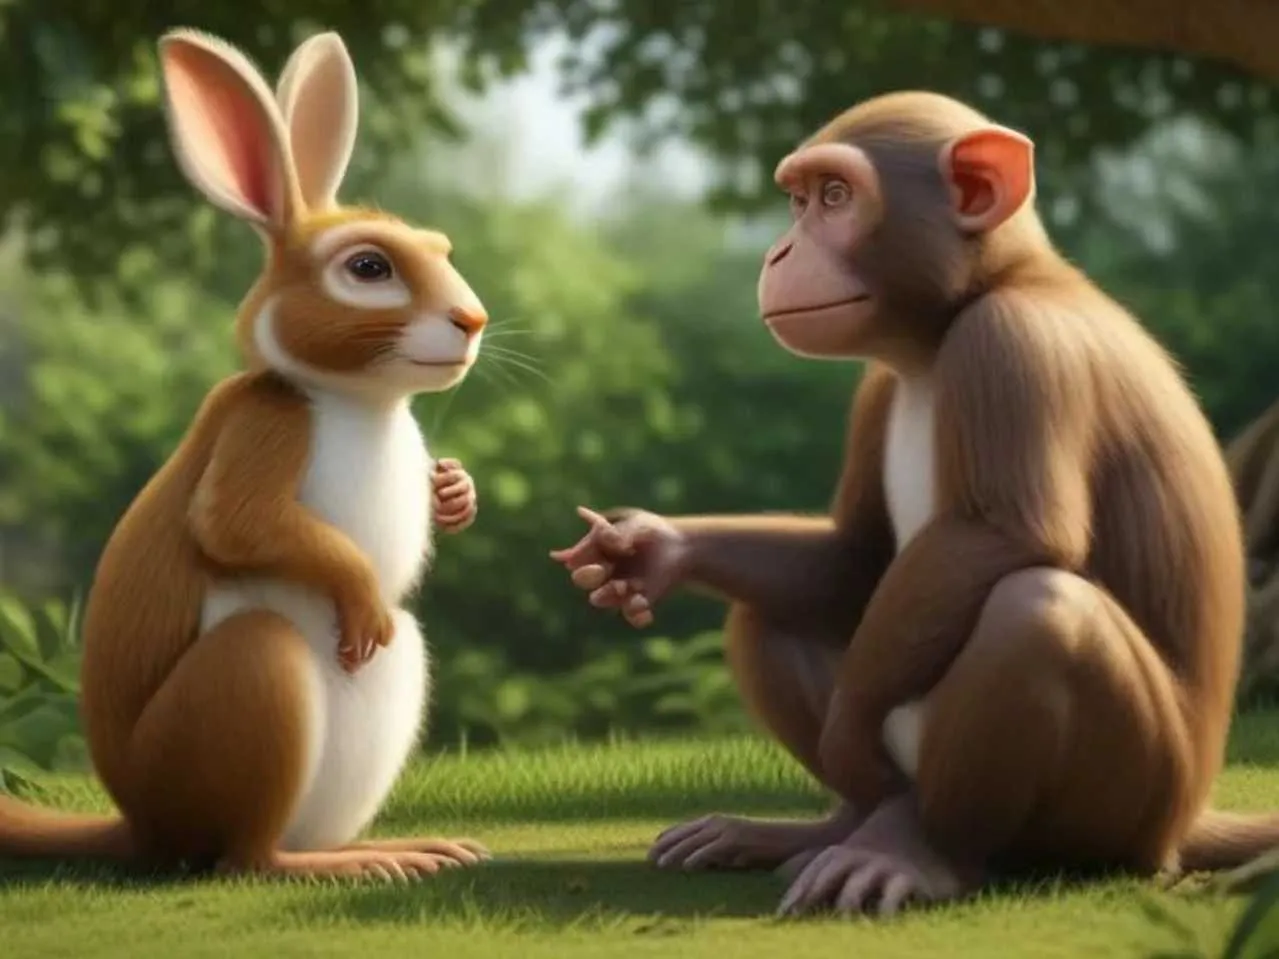 monkey talking to a rabbit cartoon image